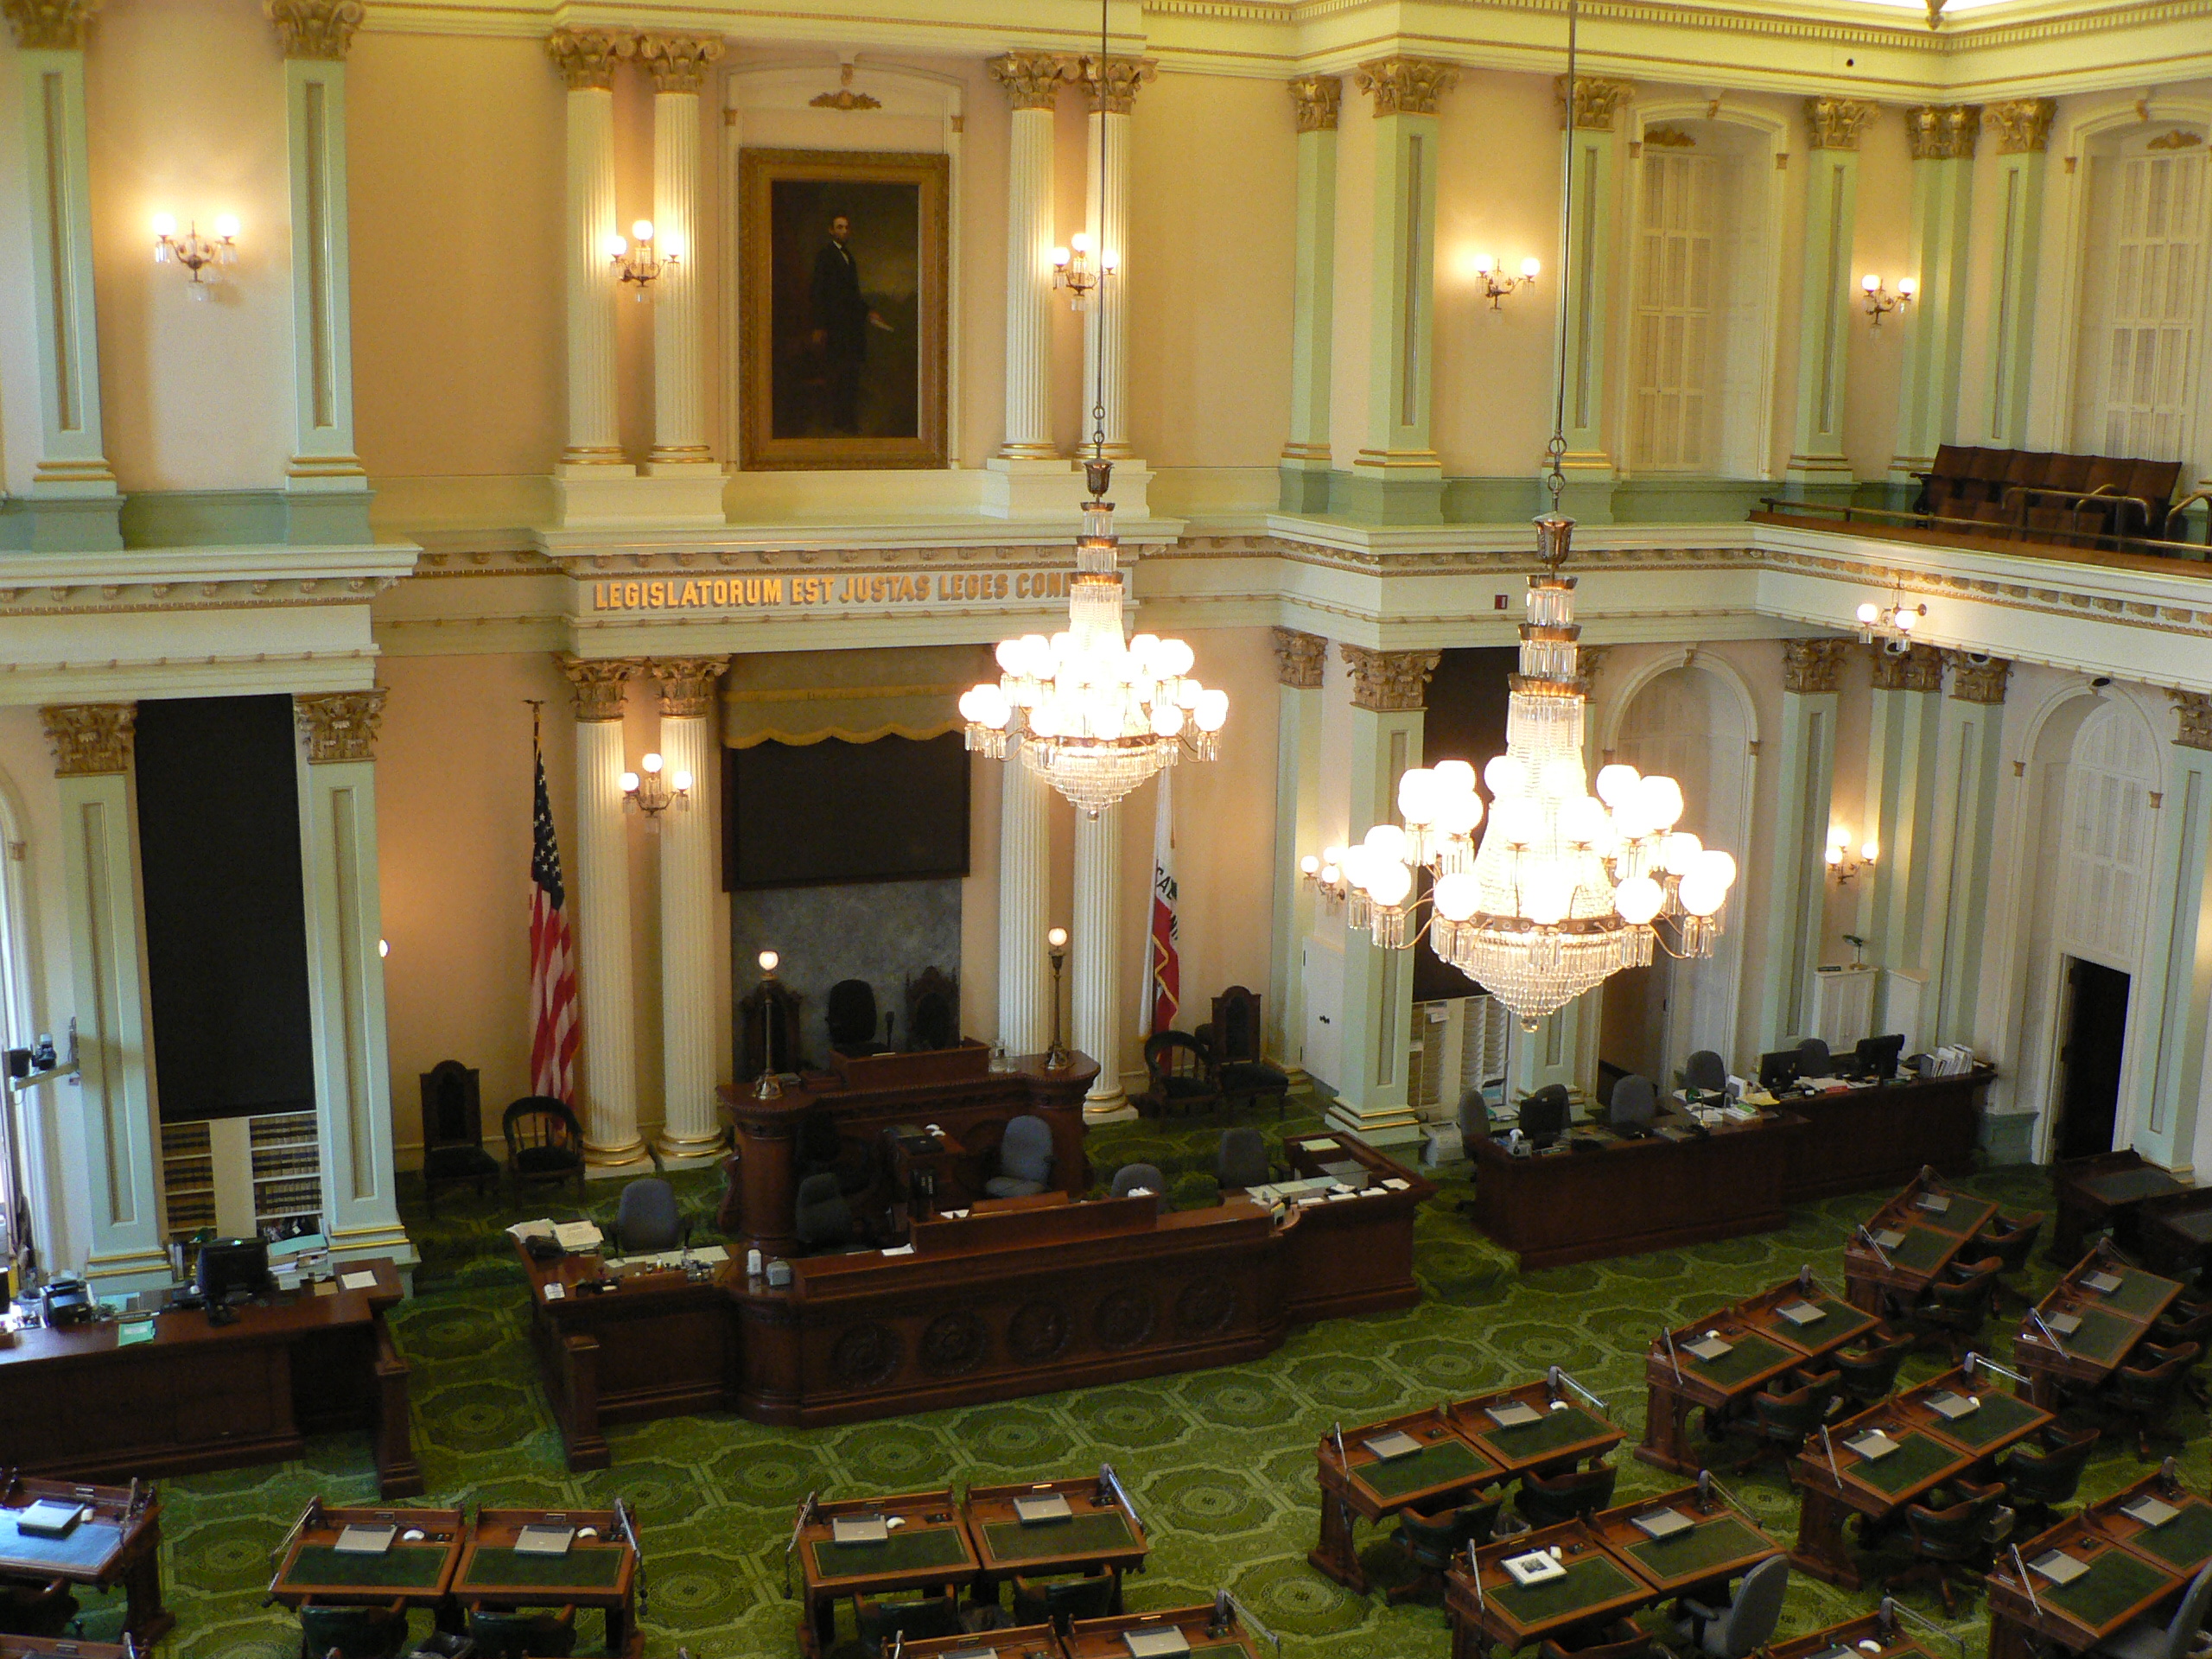 Inside of State Legislature